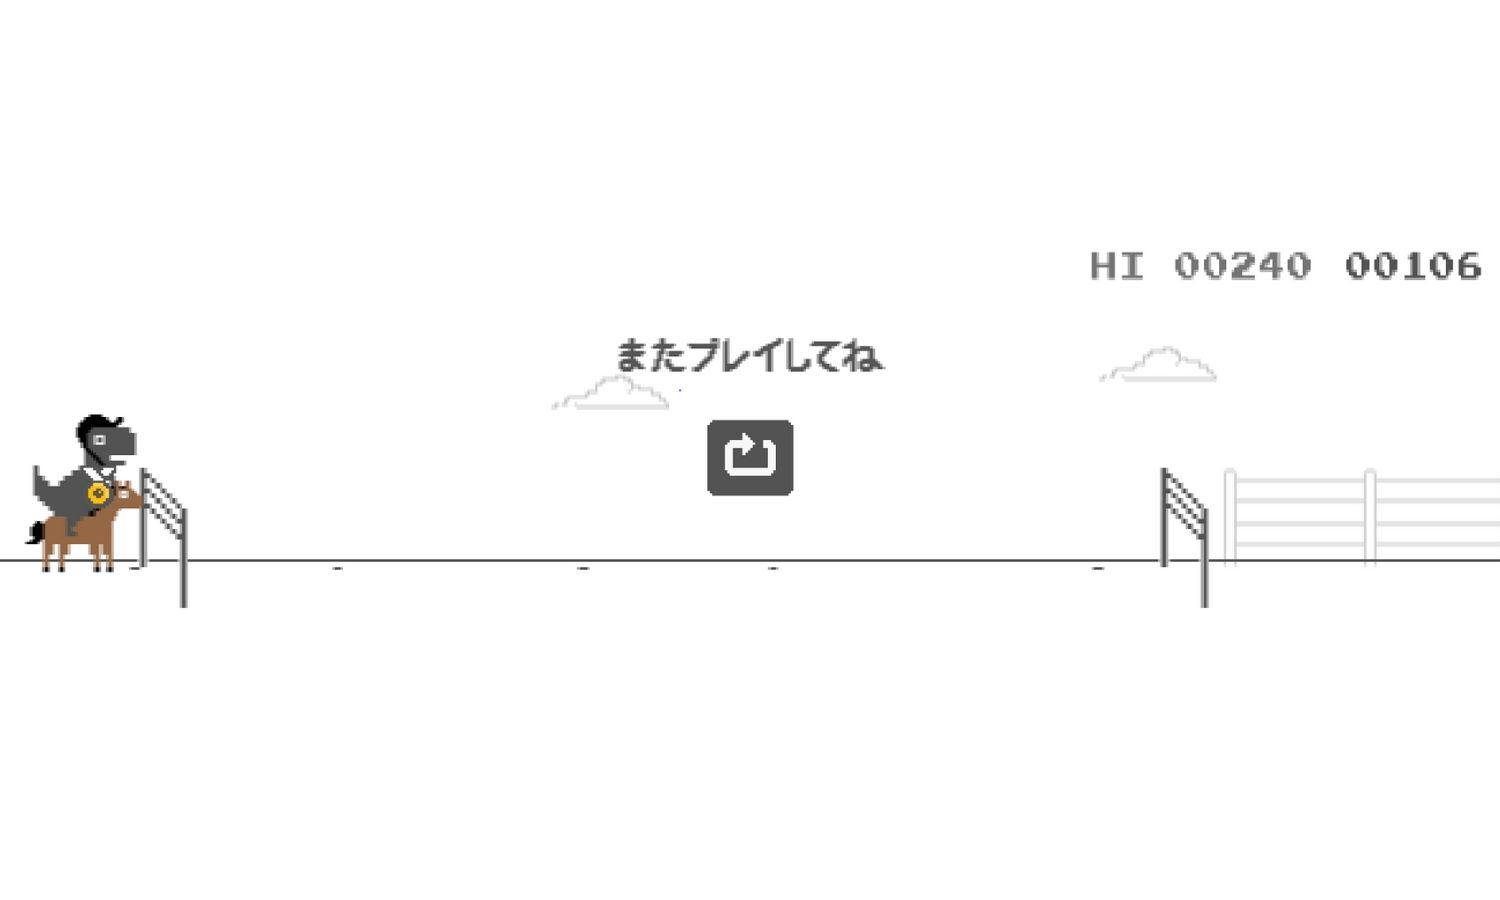 Chrome's Dino Run game gains Tokyo Olympics easter egg - 9to5Google